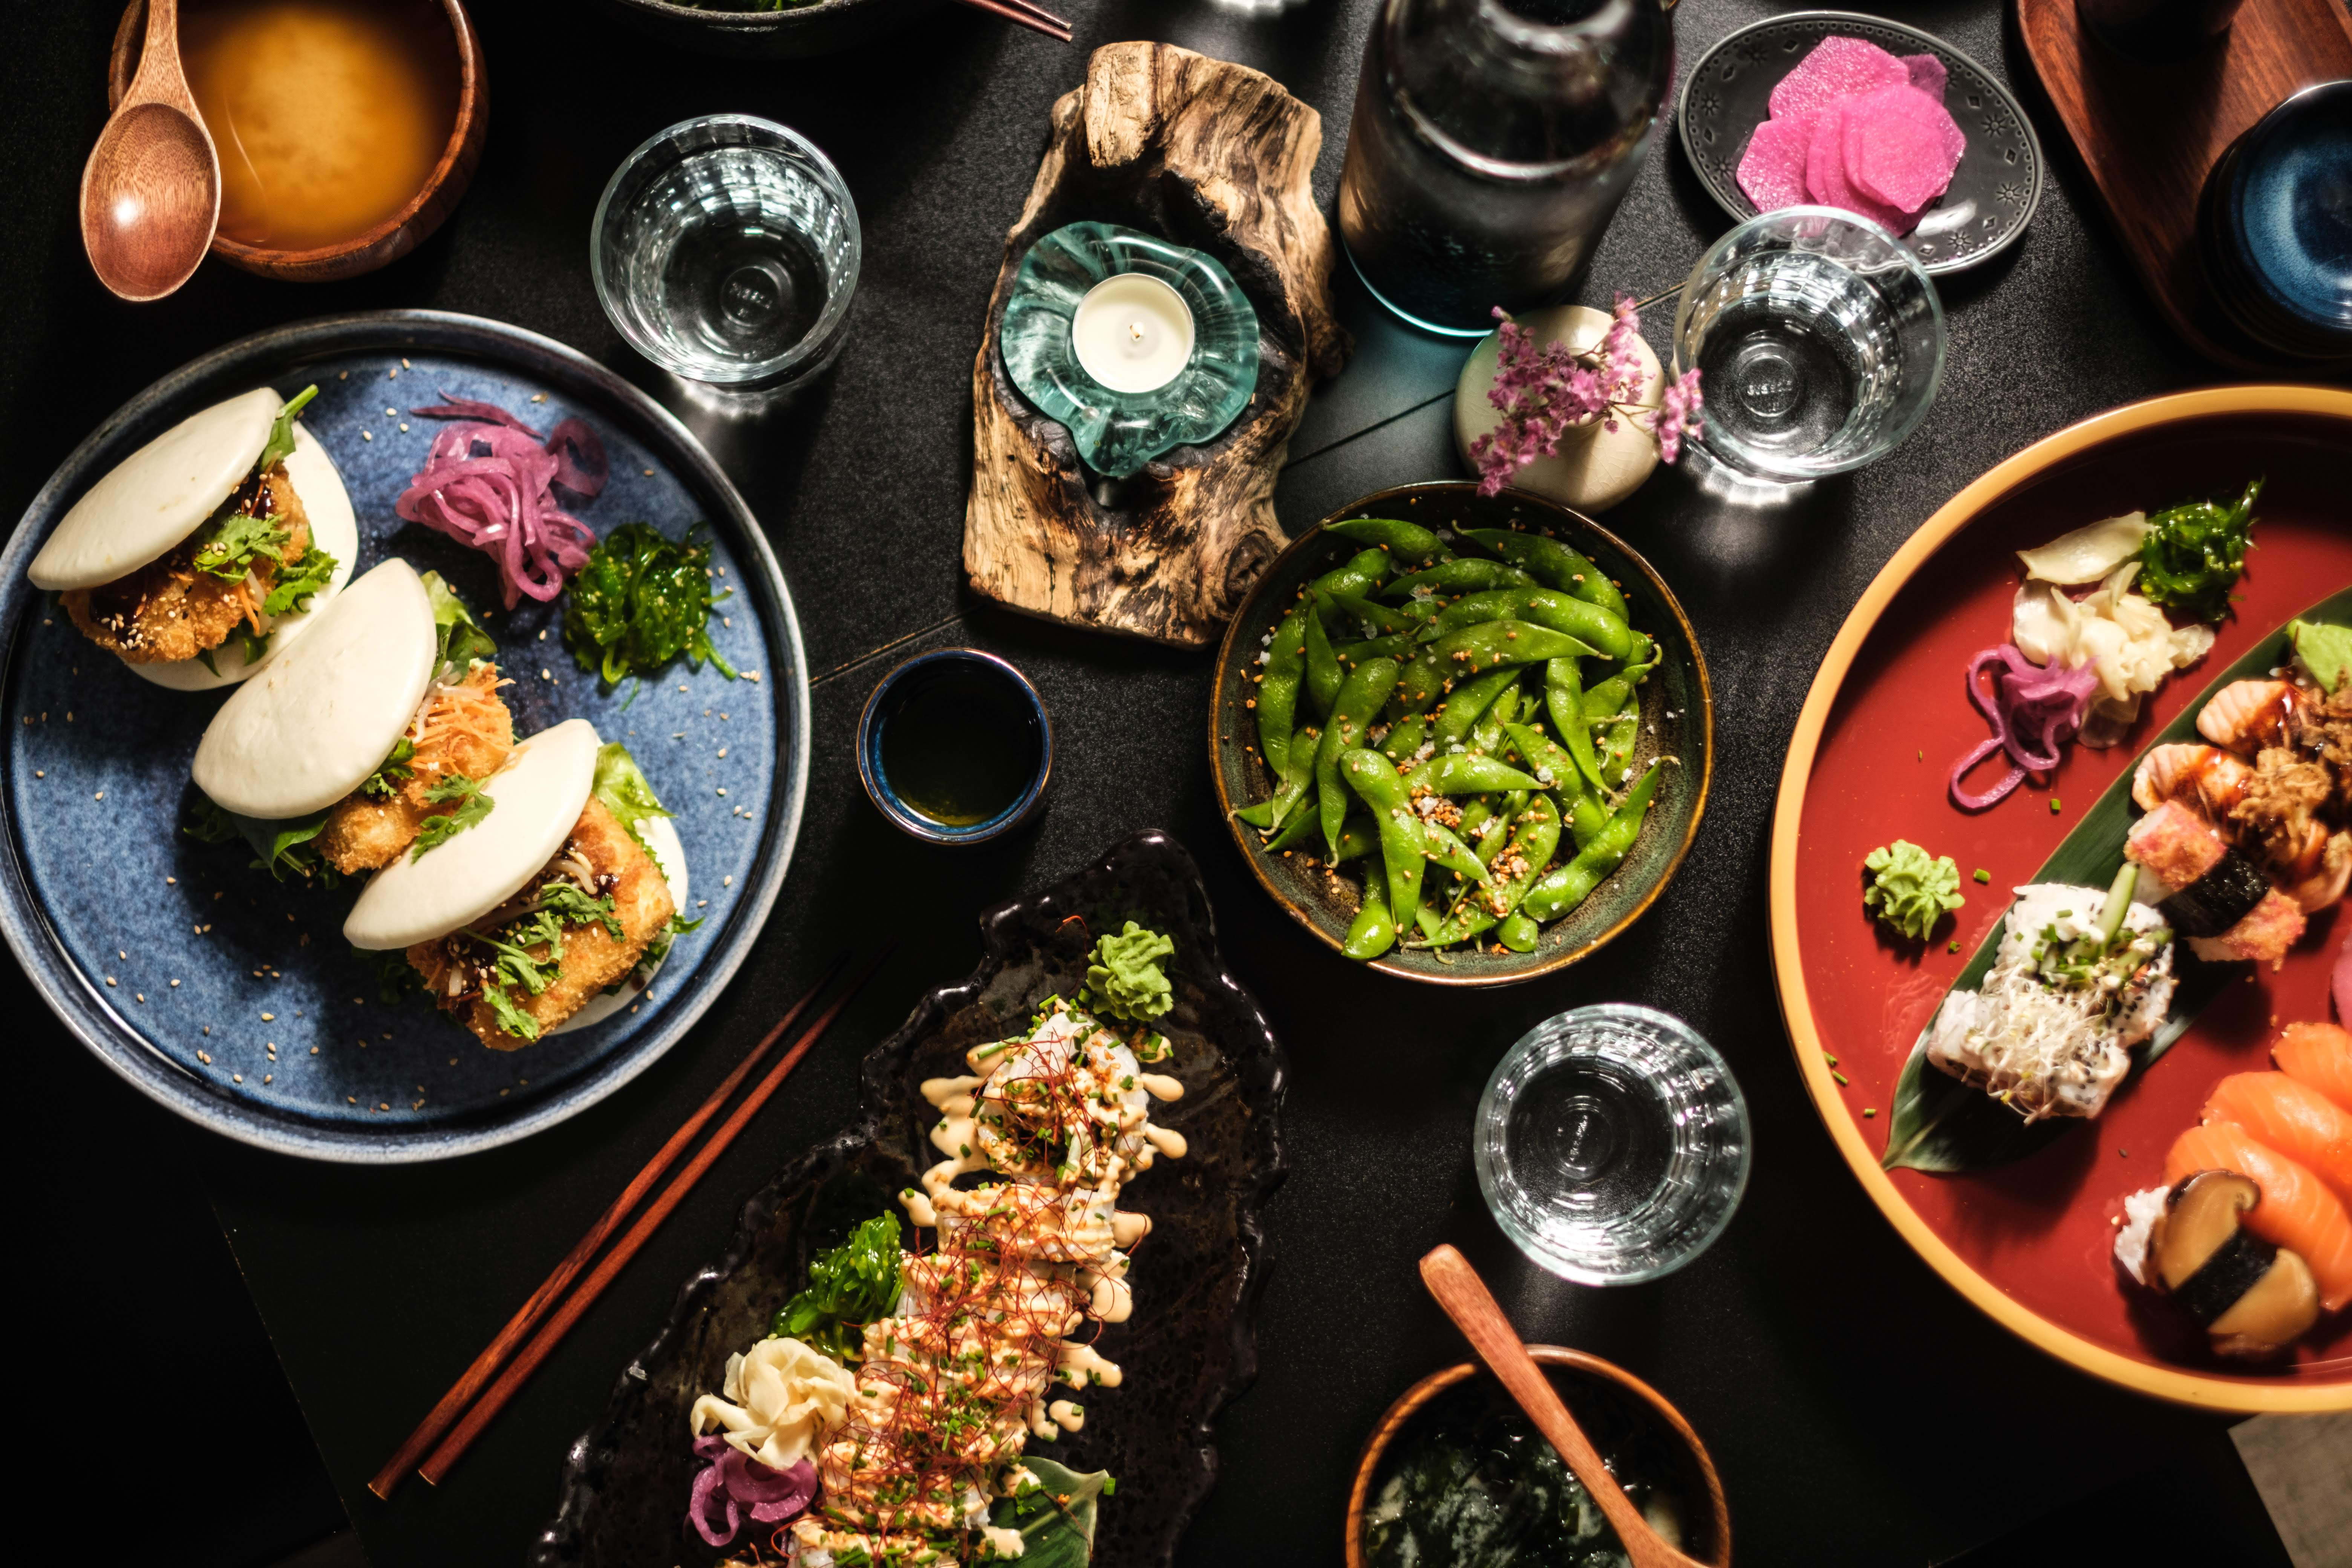 Dory's Sushi – Lunch restaurants